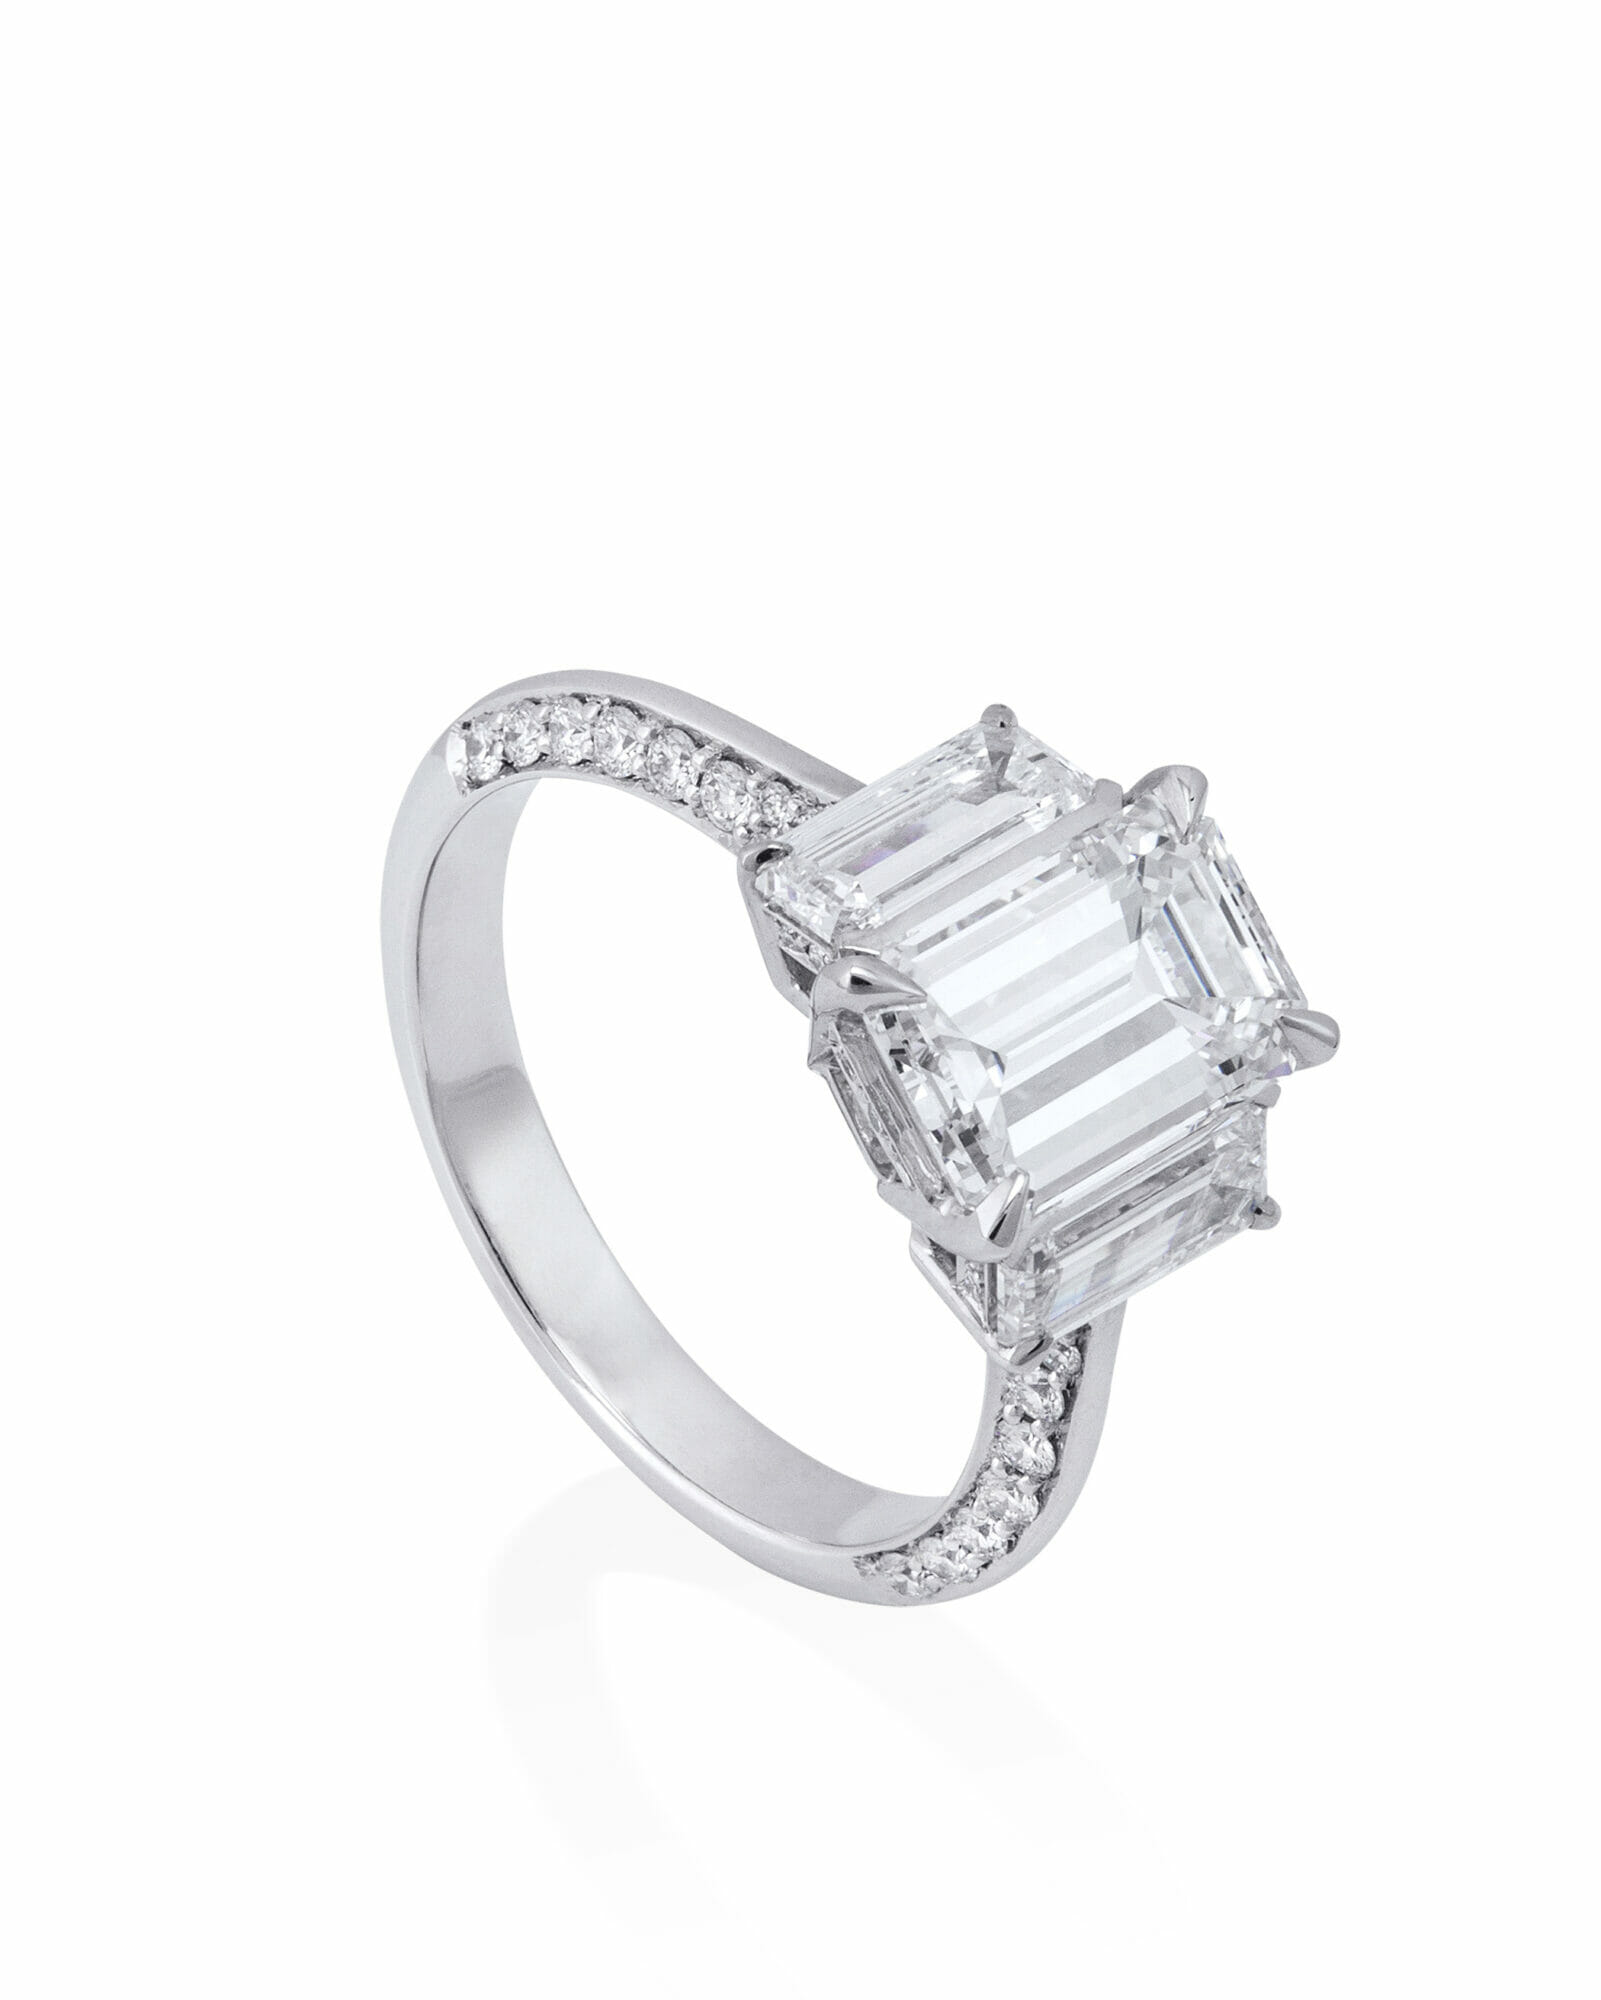 royal engagement rings diamonds wedding inspiration emerald cut